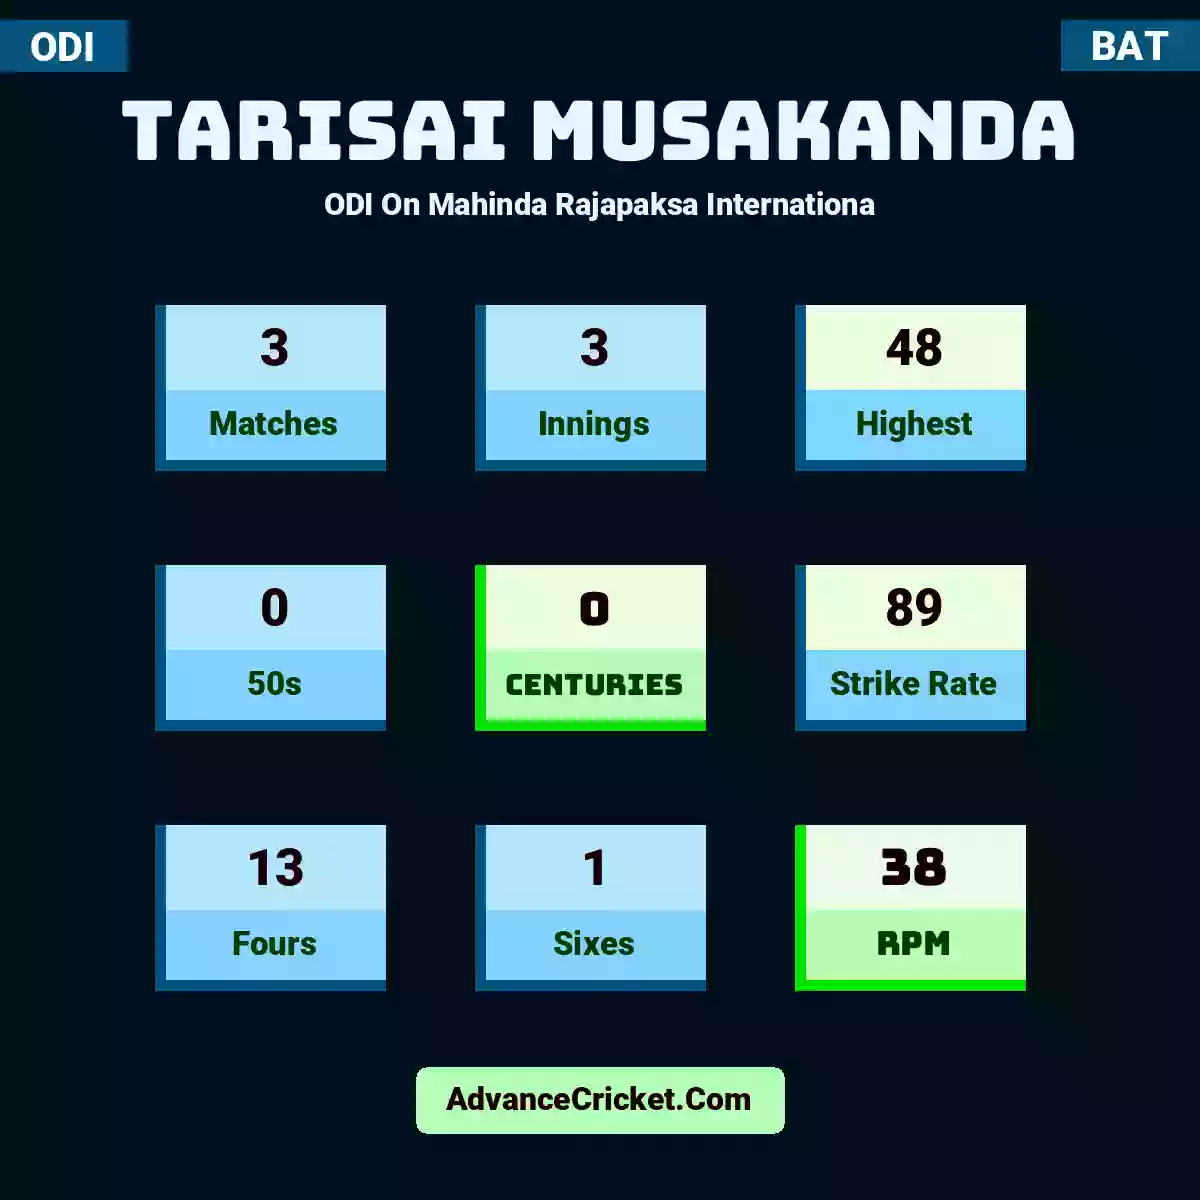 Tarisai Musakanda ODI  On Mahinda Rajapaksa Internationa, Tarisai Musakanda played 3 matches, scored 48 runs as highest, 0 half-centuries, and 0 centuries, with a strike rate of 89. T.Musakanda hit 13 fours and 1 sixes, with an RPM of 38.